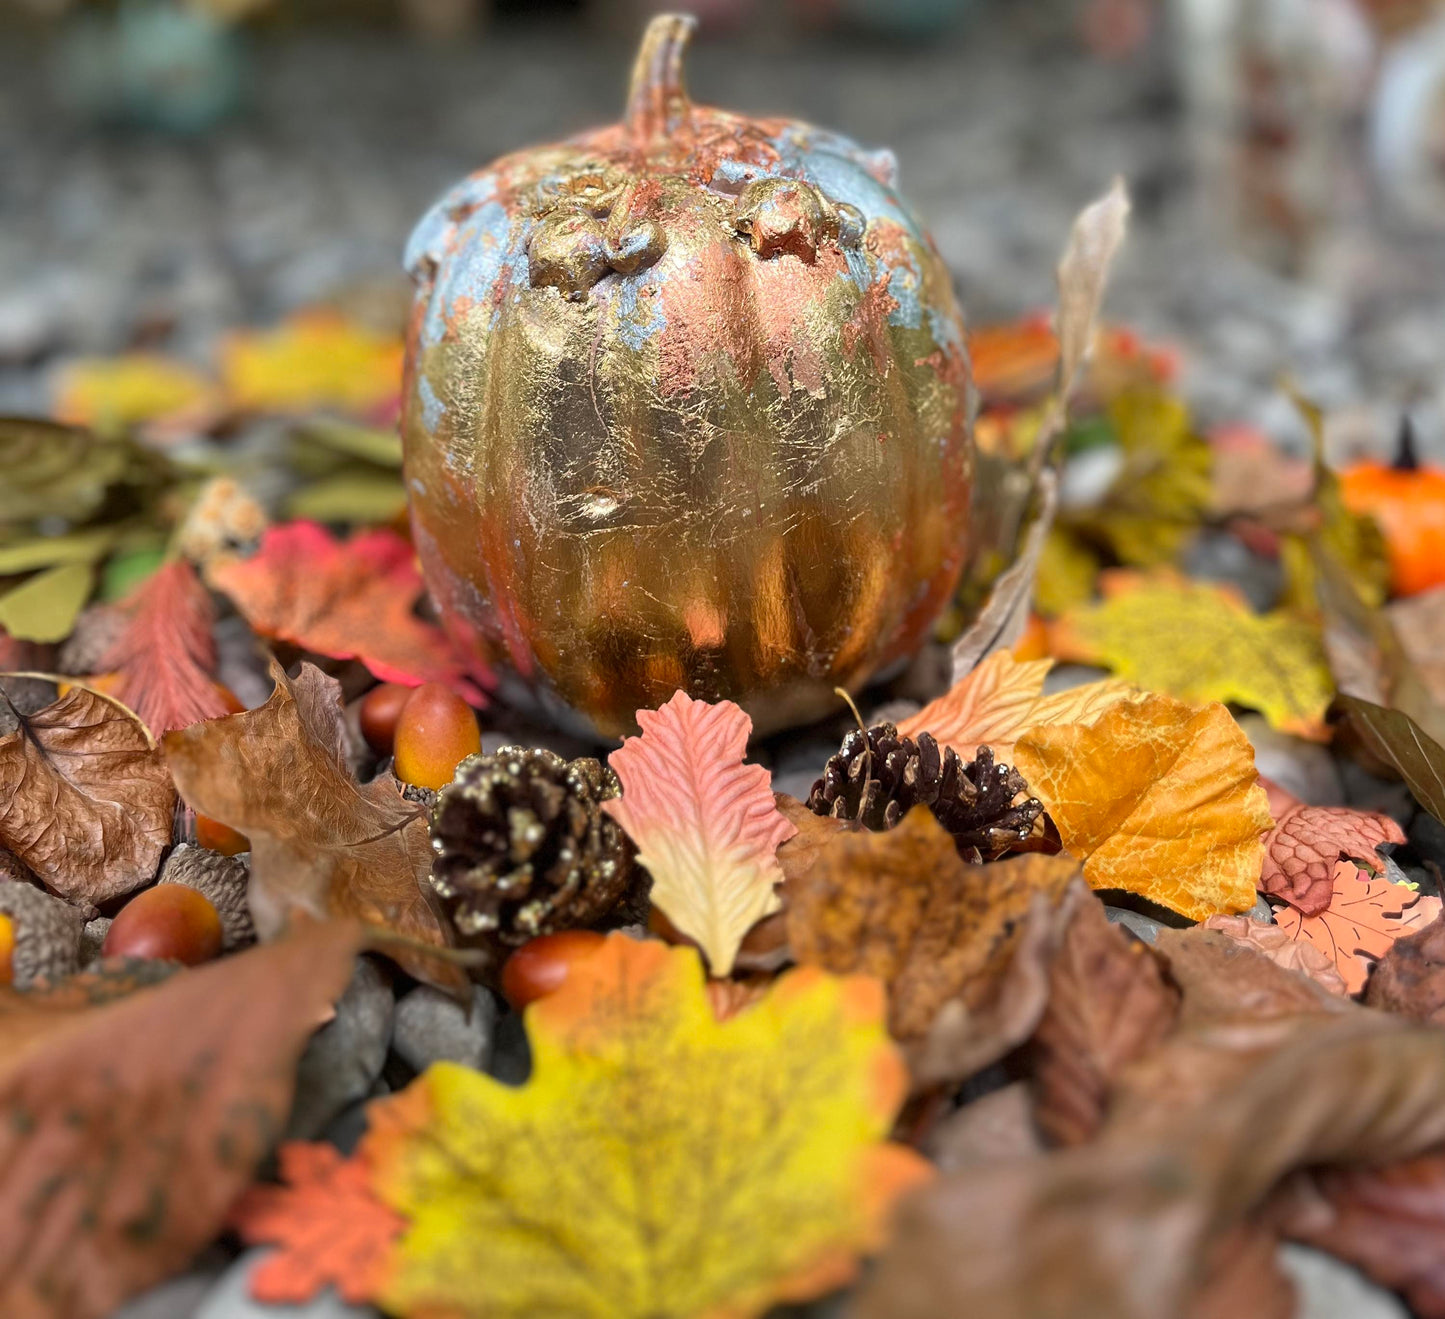 Precious Metals Pumpkin Table Décor - Home Décor - Autumn - Fall